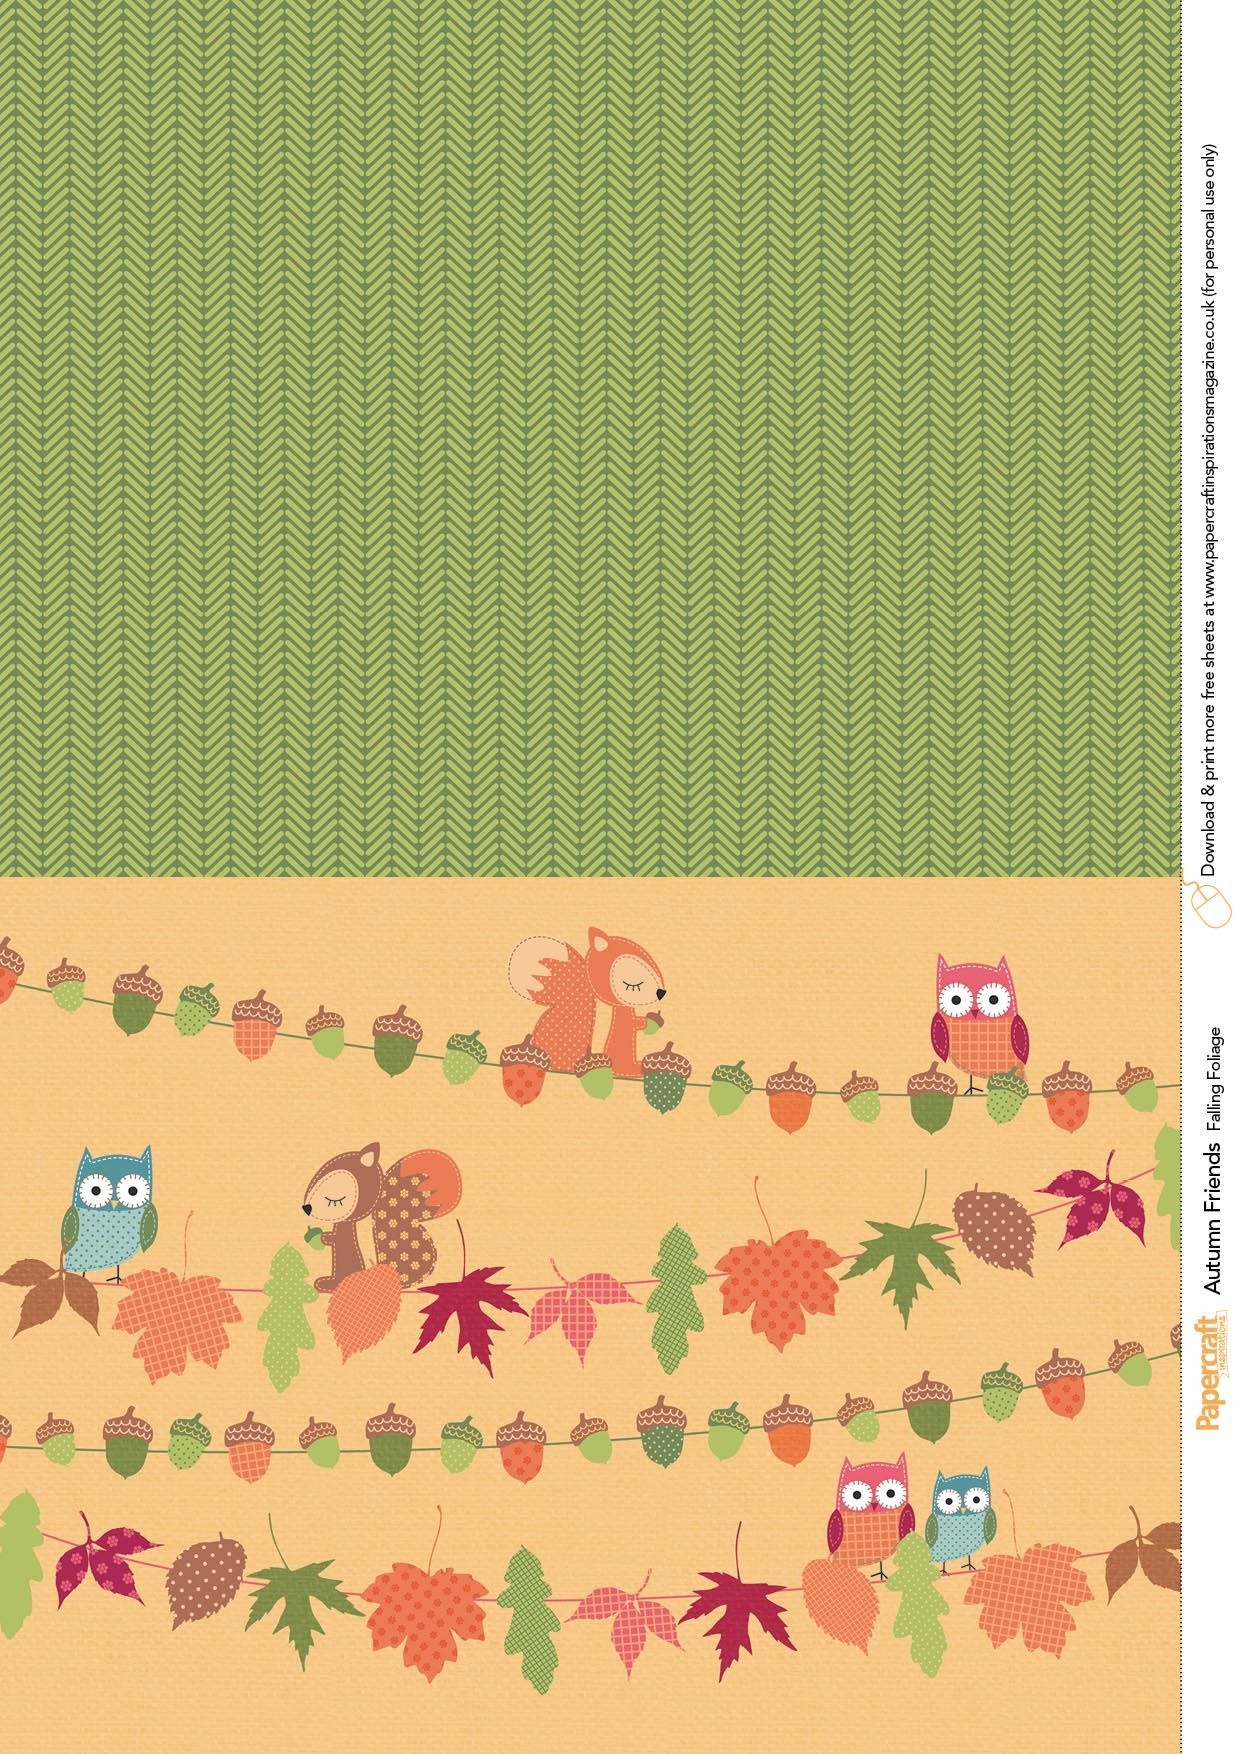 leaf-crafts-fun-crafts-crafts-for-kids-paper-crafts-autumn-trees